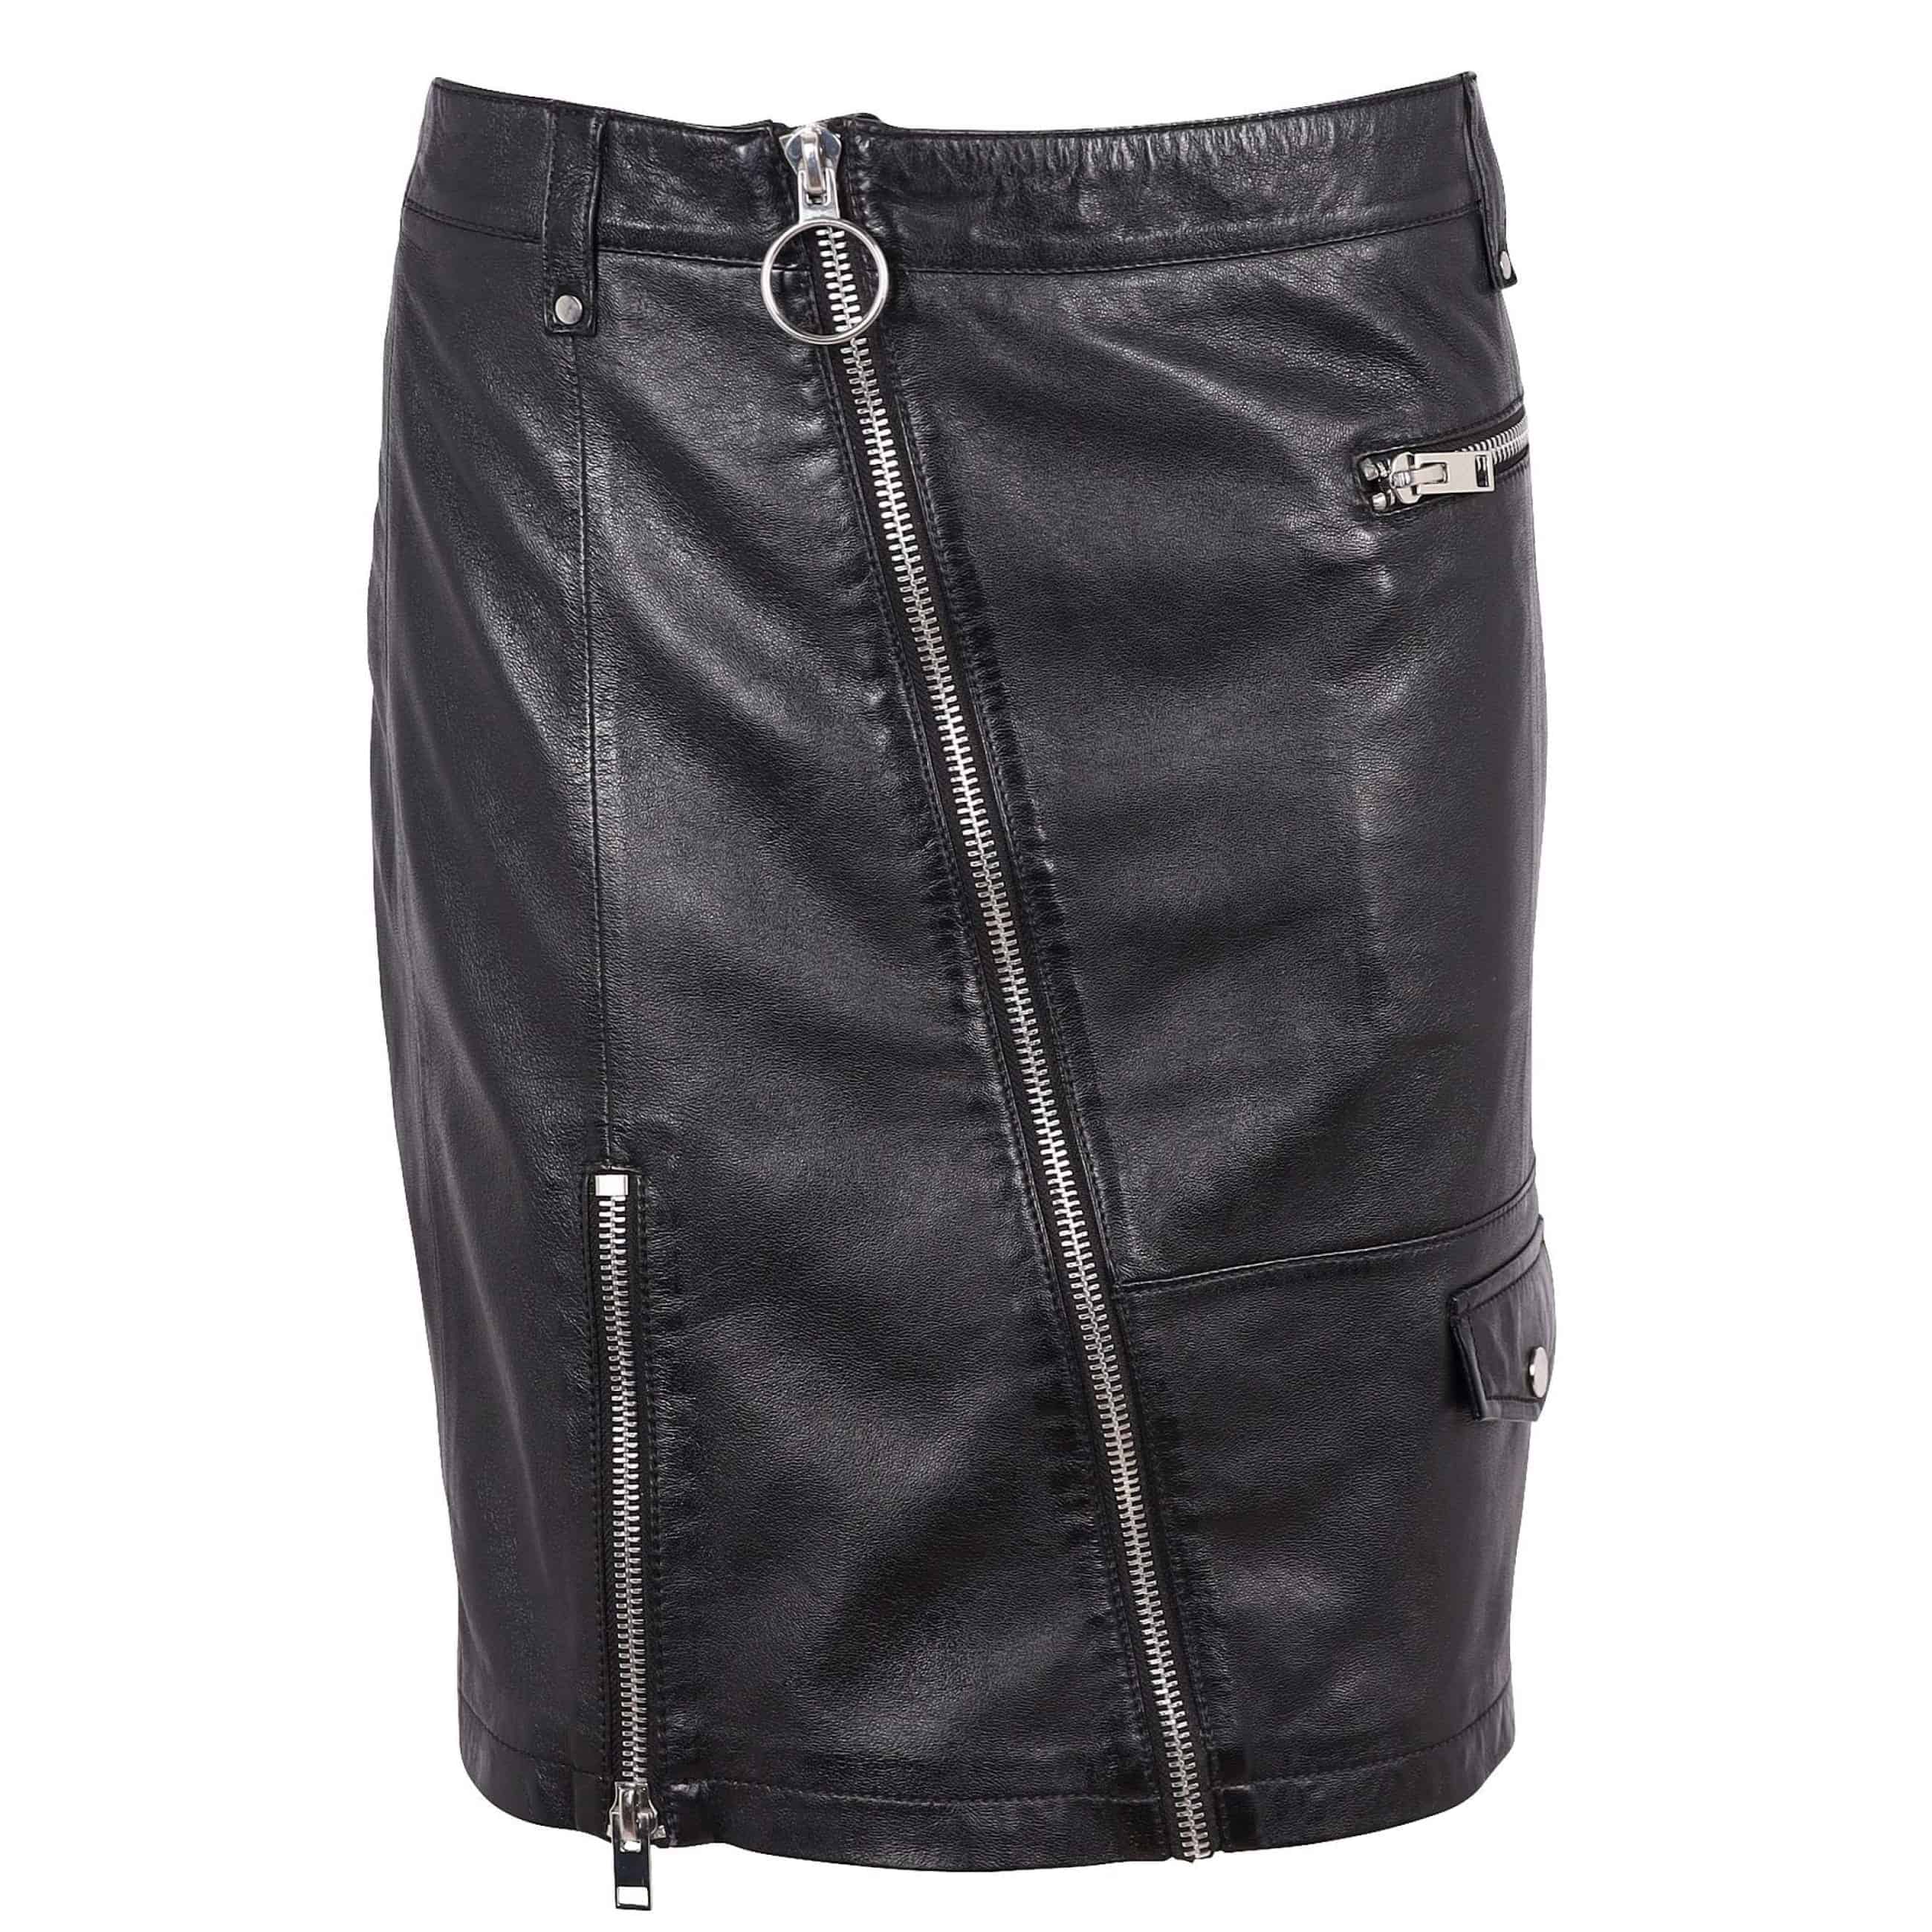 Mauritius Seela Leather Skirt in Black 